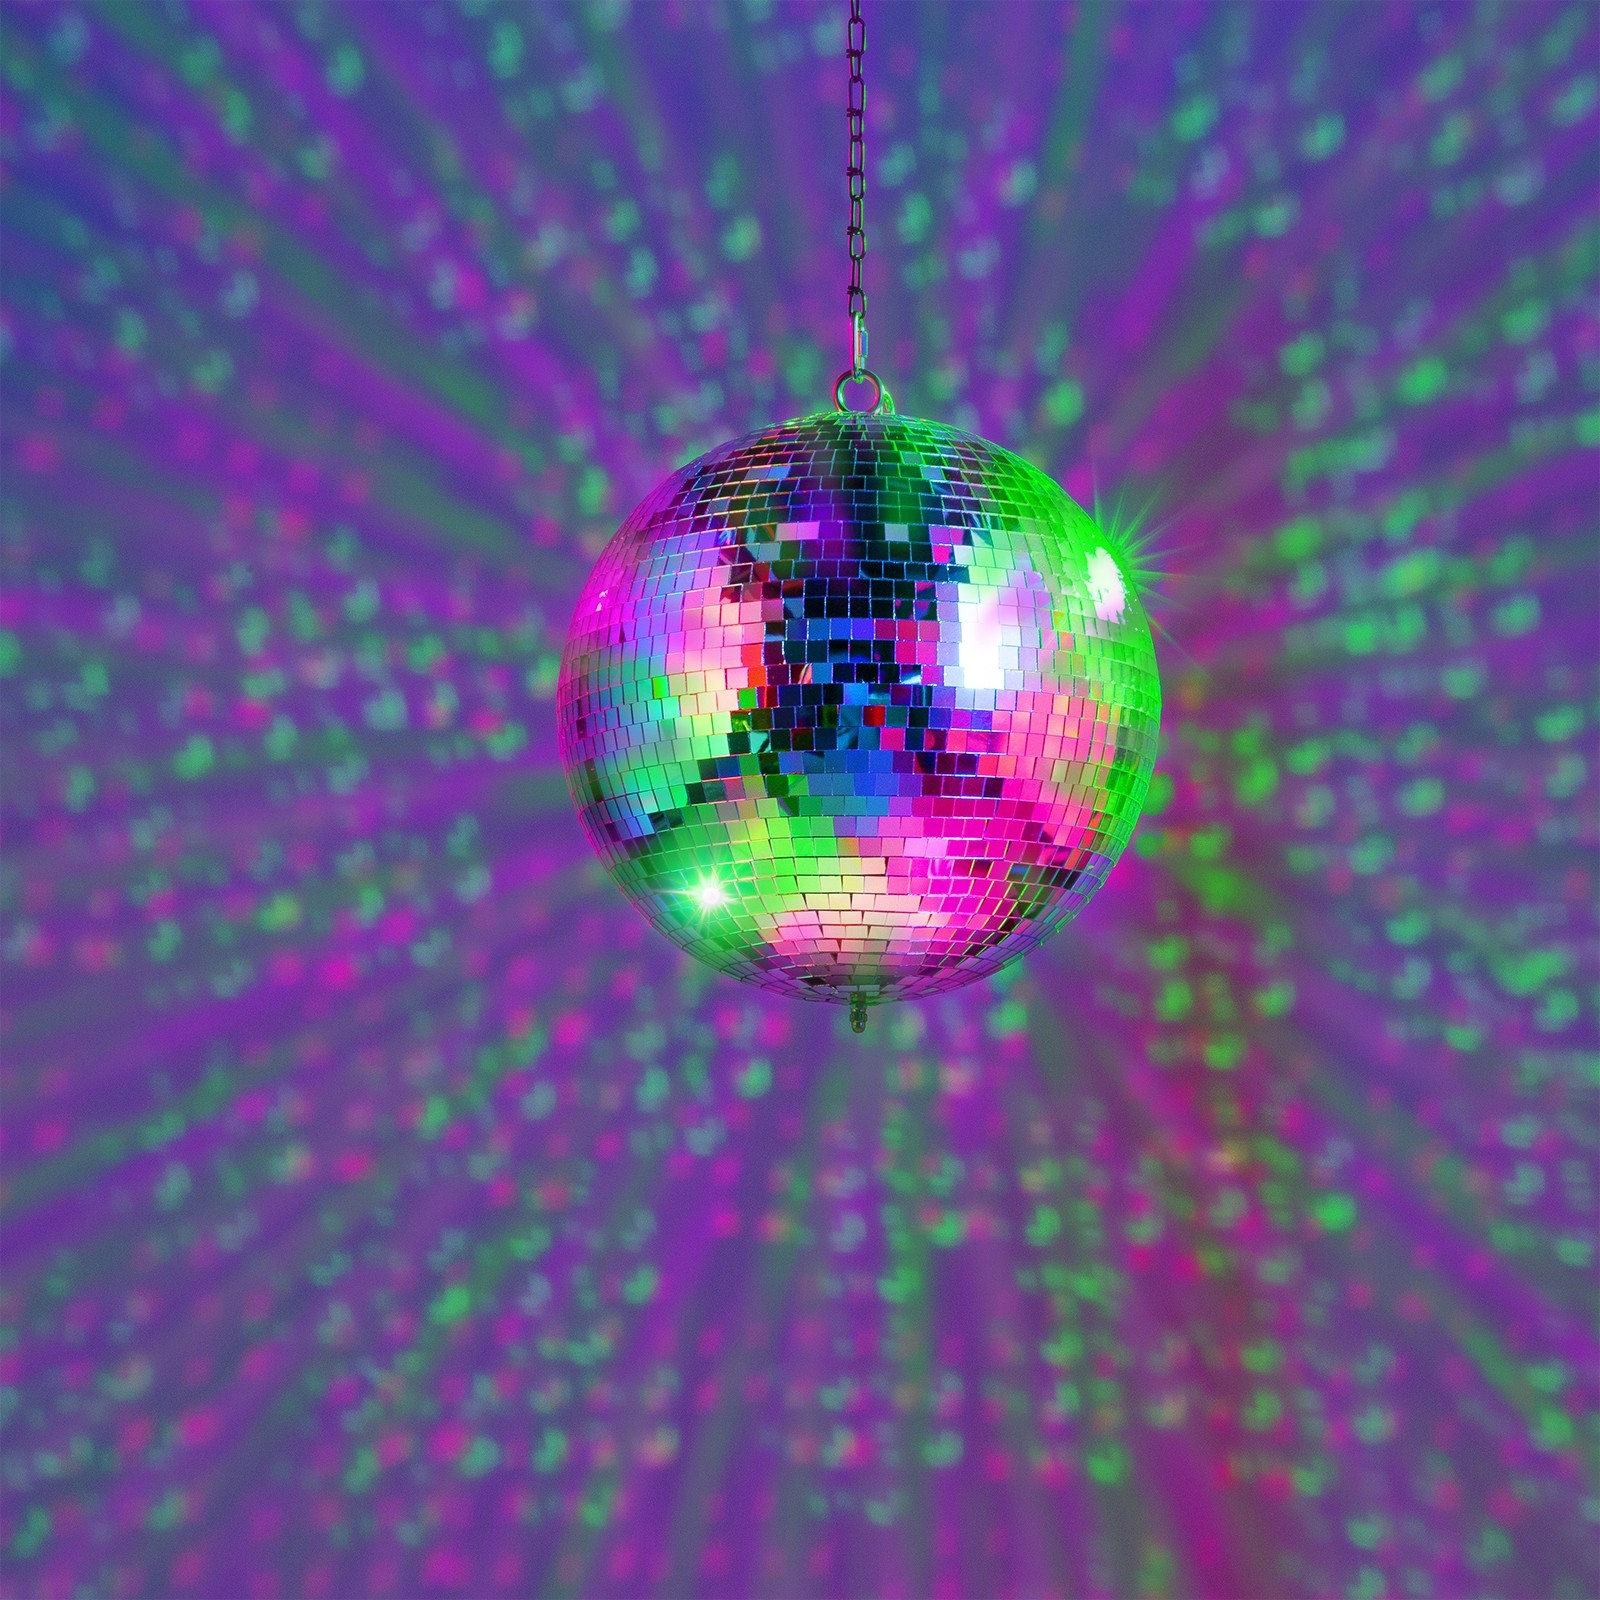 FuZZIX MB30ML Mirror Disco ball - Ντισκομπάλα 30cm (12") με μοτέρ με μπαταρίες και RGBW LEDs 151.337